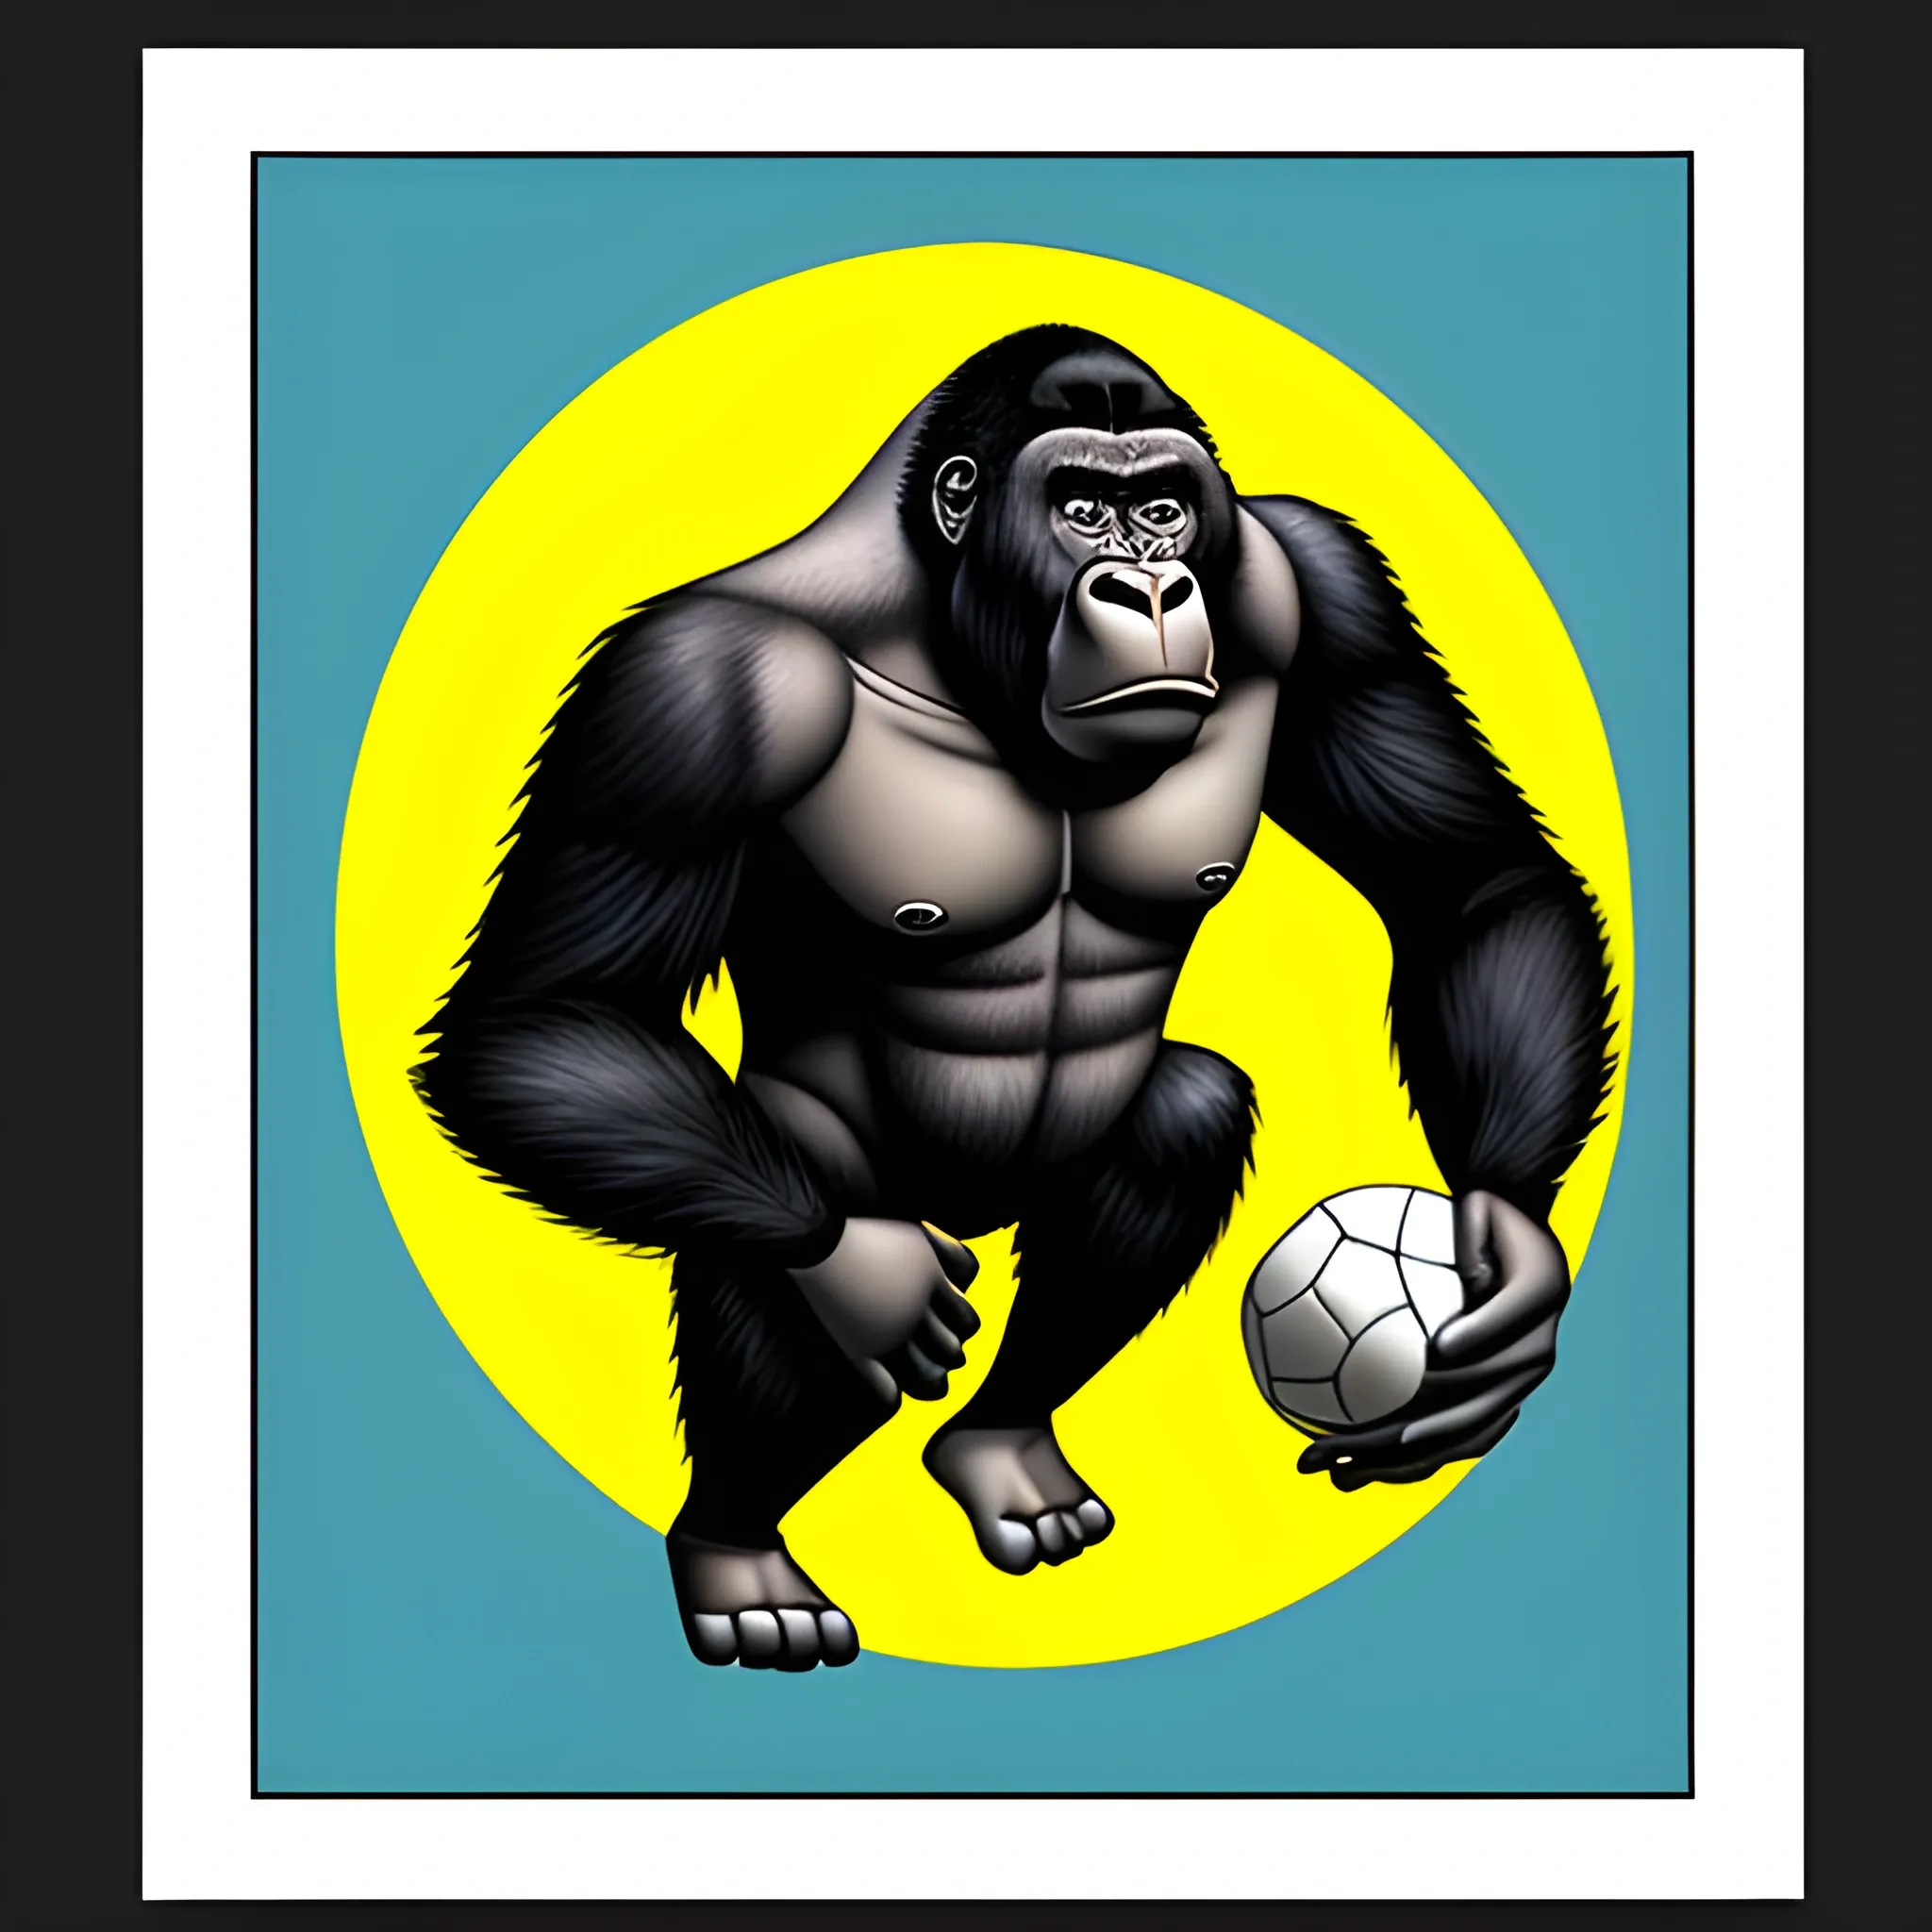 Gorilla, HANDBALL H3 ball in hand, Cartoon, 